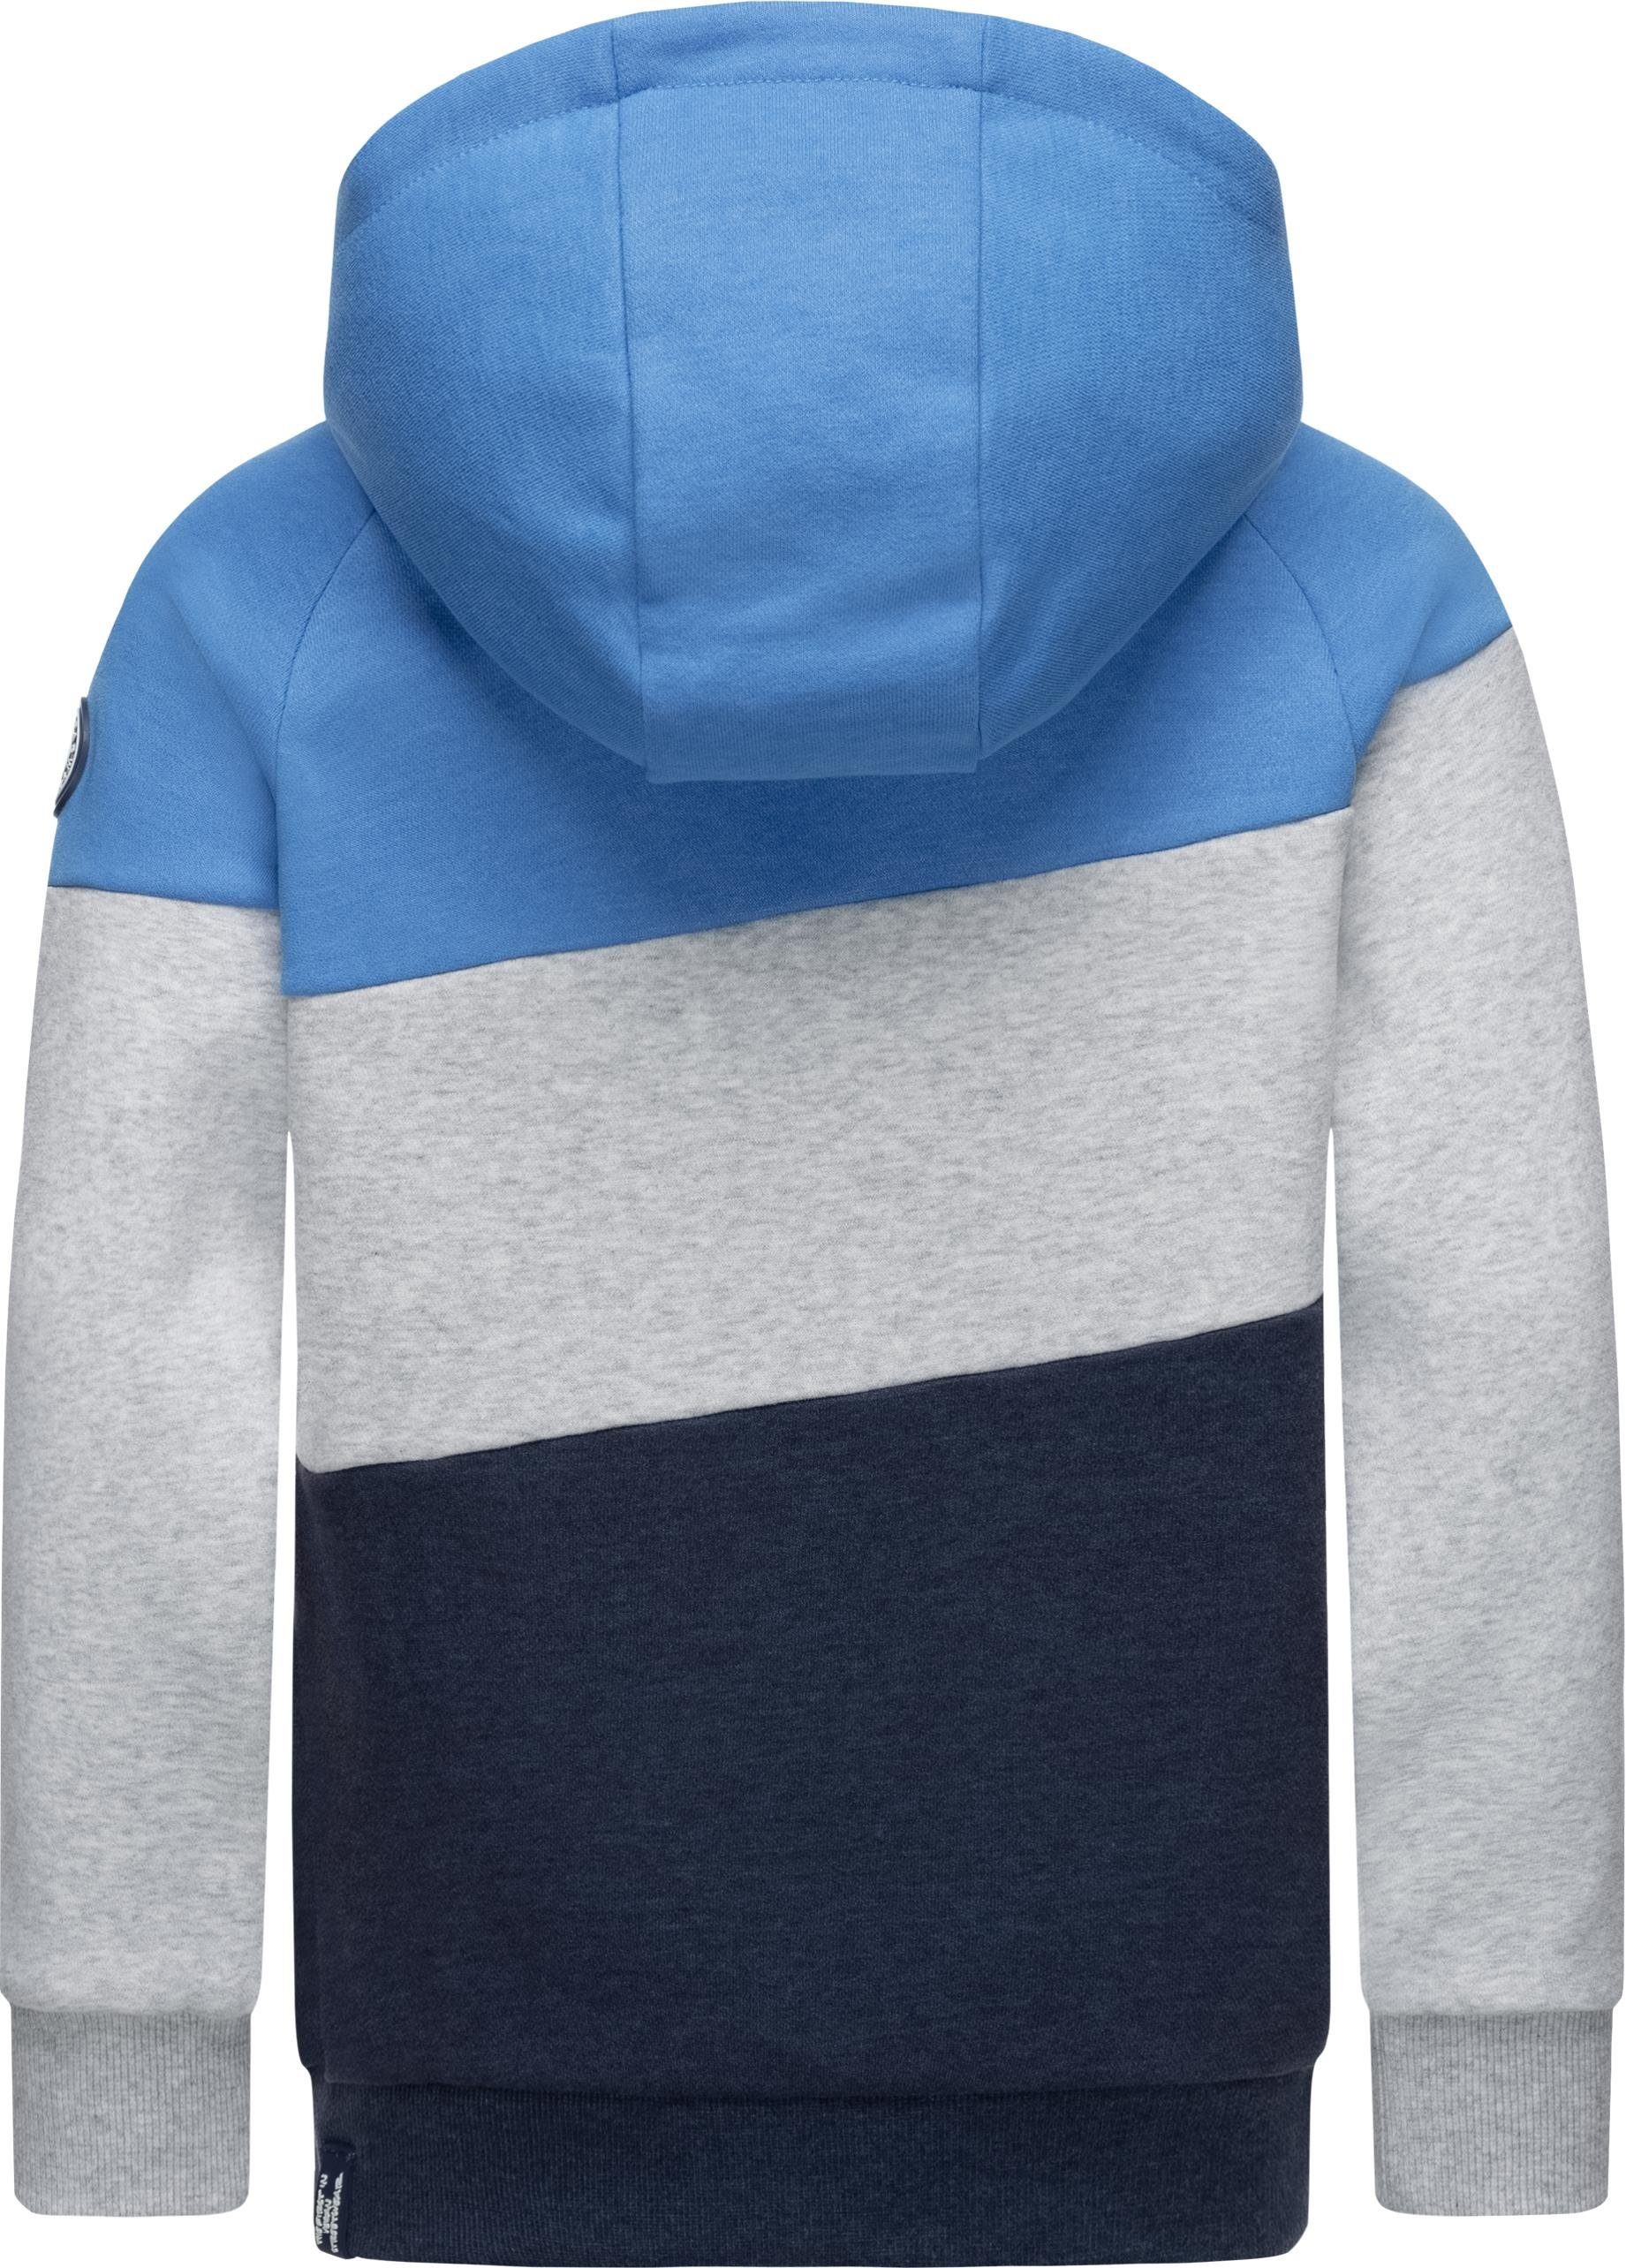 blau Kapuzenpullover Kapuzensweater mit Kapuze Kinder Jungen großer Vendio Ragwear